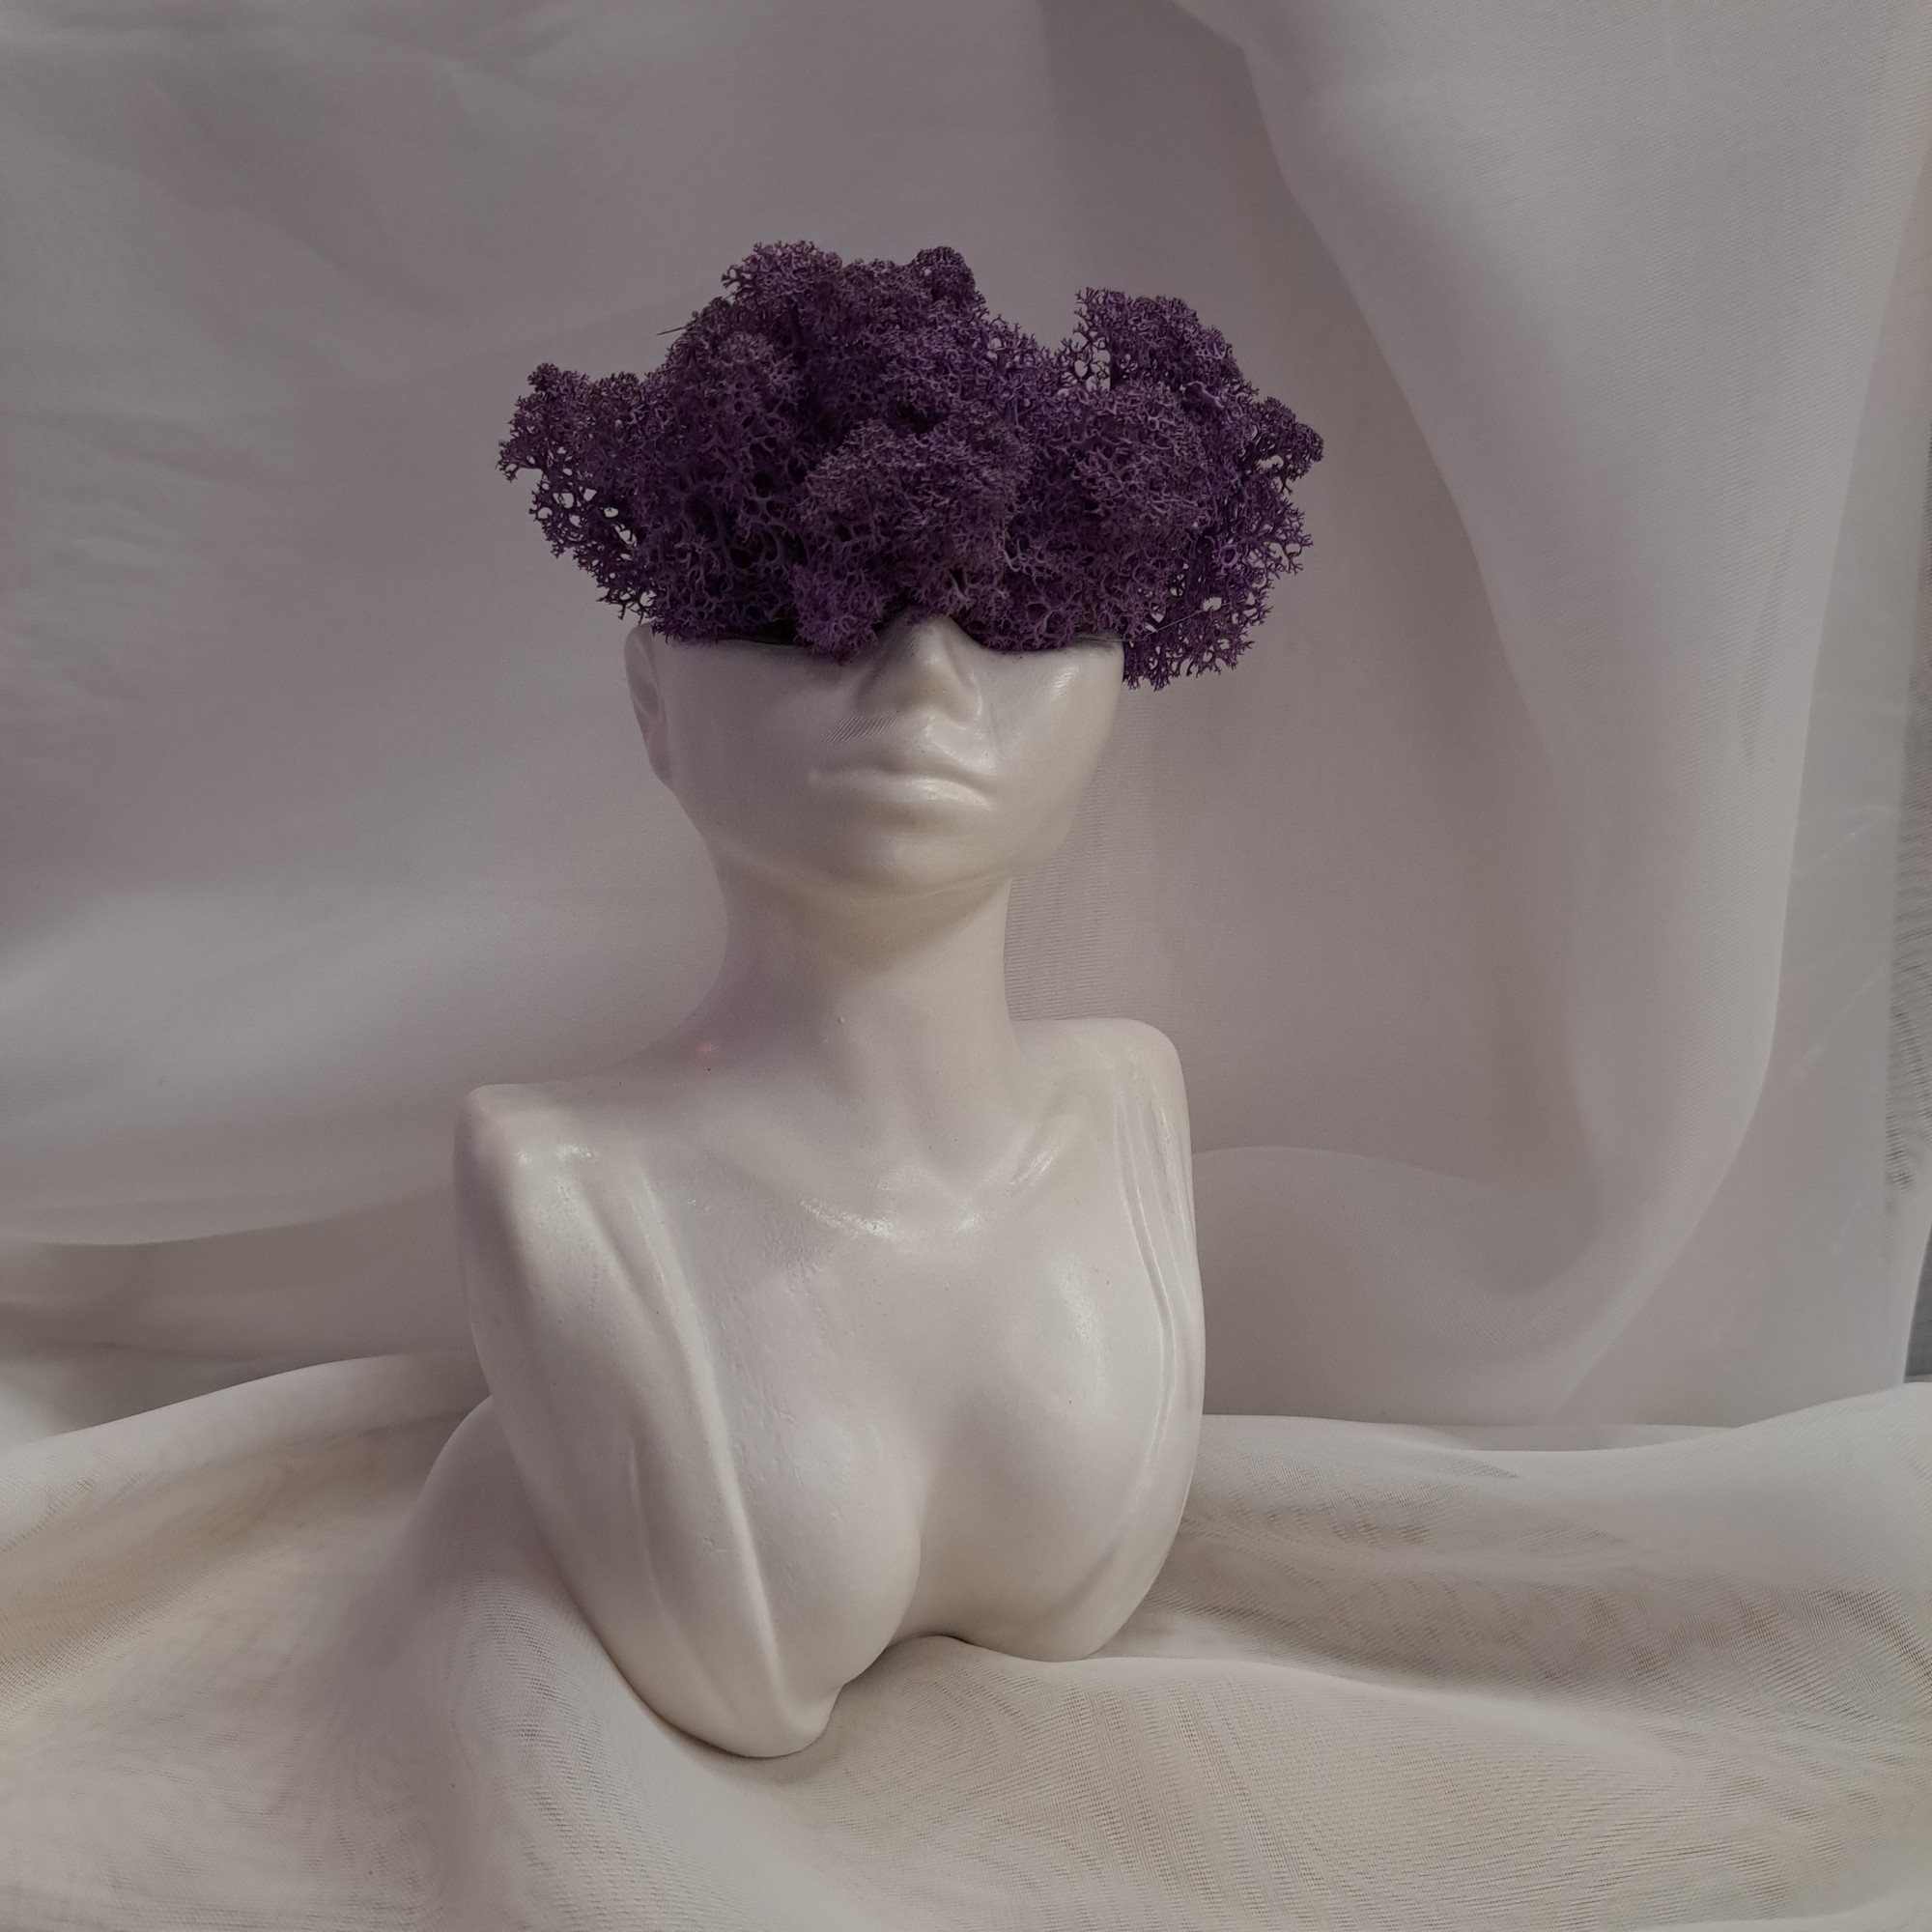 Vase-shaped planter filled with lush violet moss "Virgo"